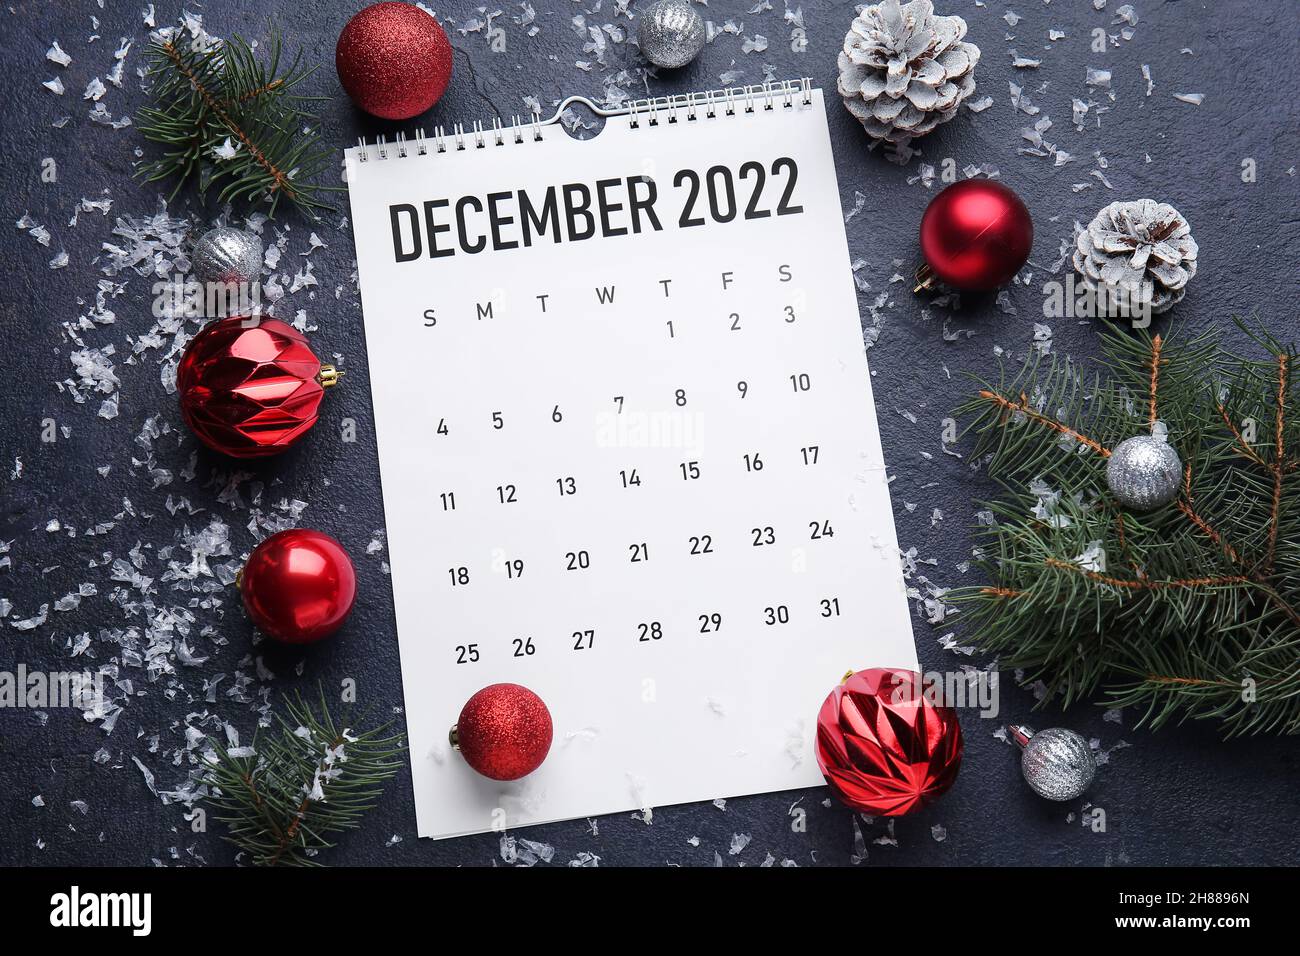 Free Desktop Wallpapers December 2022  A Dash of Kam